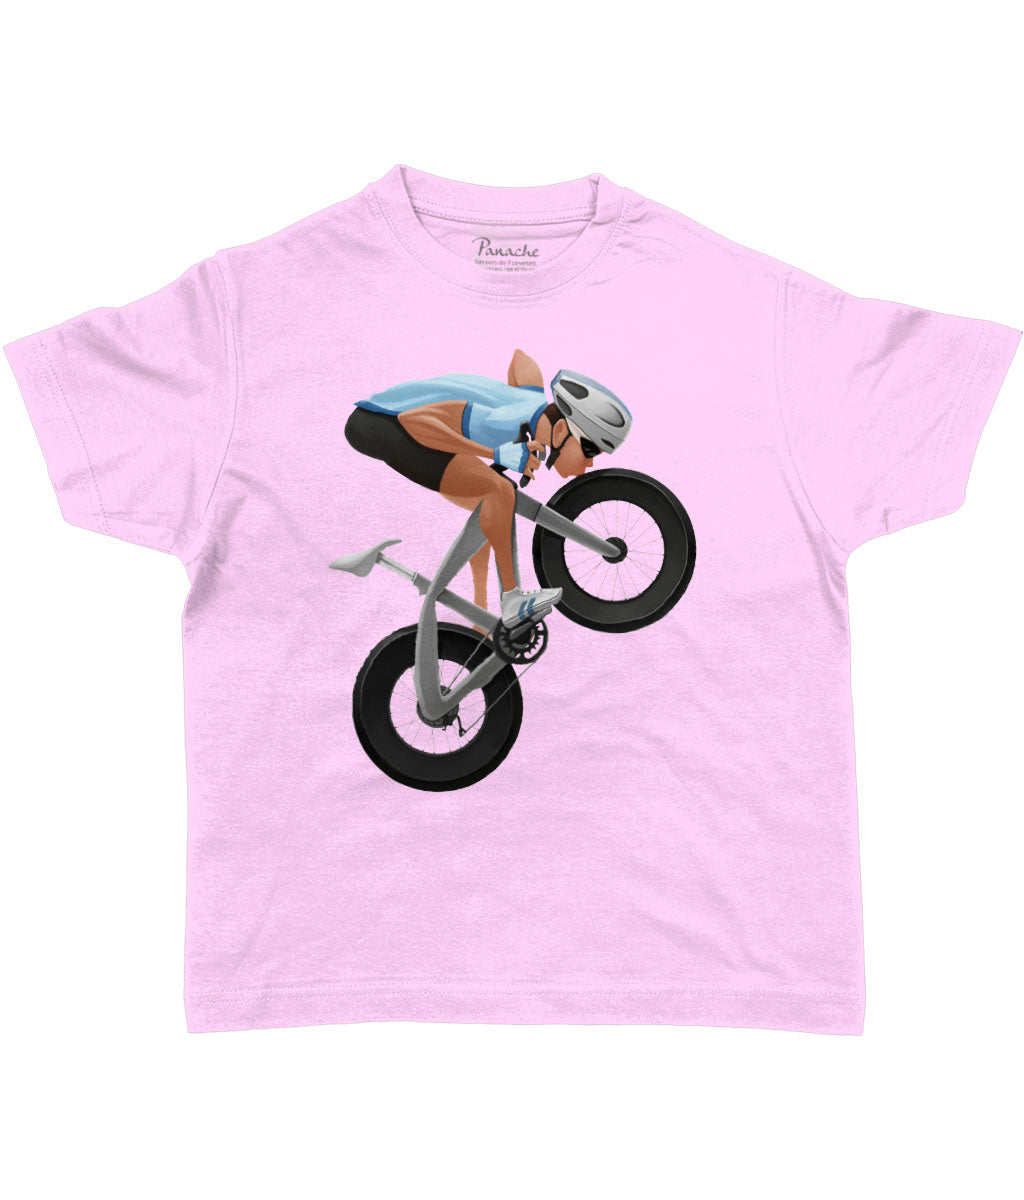 Cyclist Kissing his Bicycle Kids Cycling T-shirt Pink